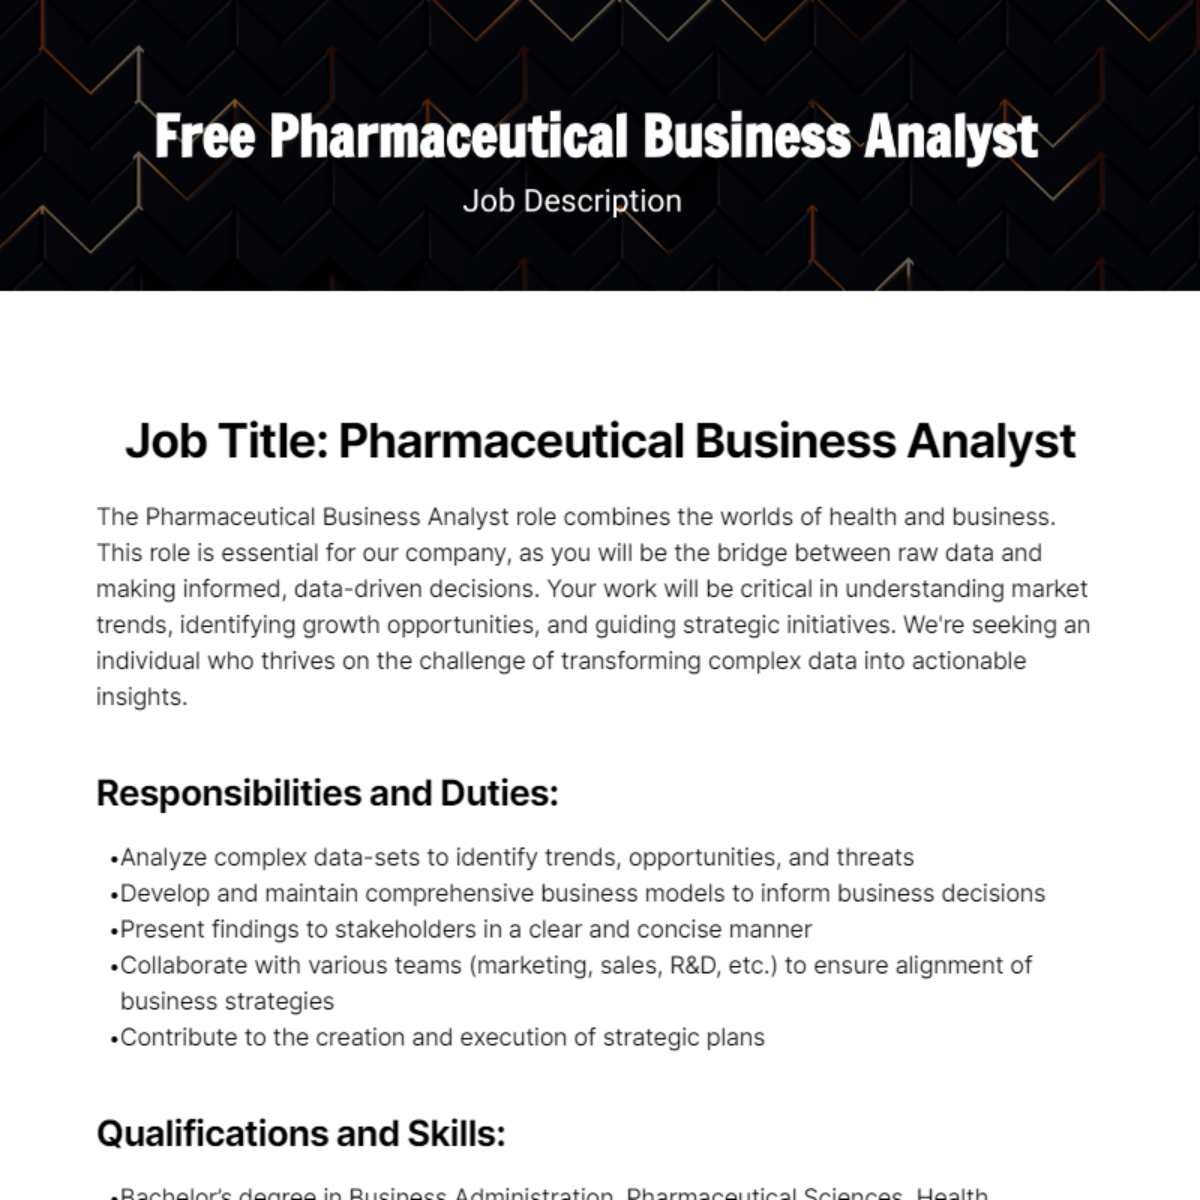 Free Pharmaceutical Business Analyst Job Description Template